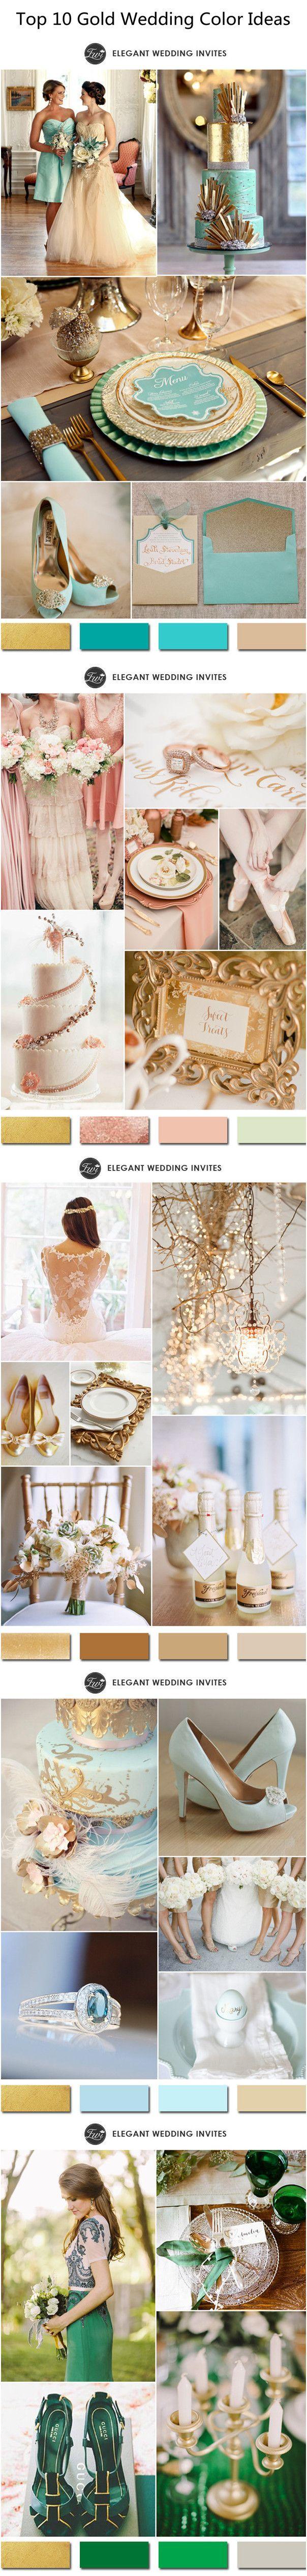 Hochzeit - 10 Hottest Gold Wedding Color Ideas-2016 Wedding Trends Part Two